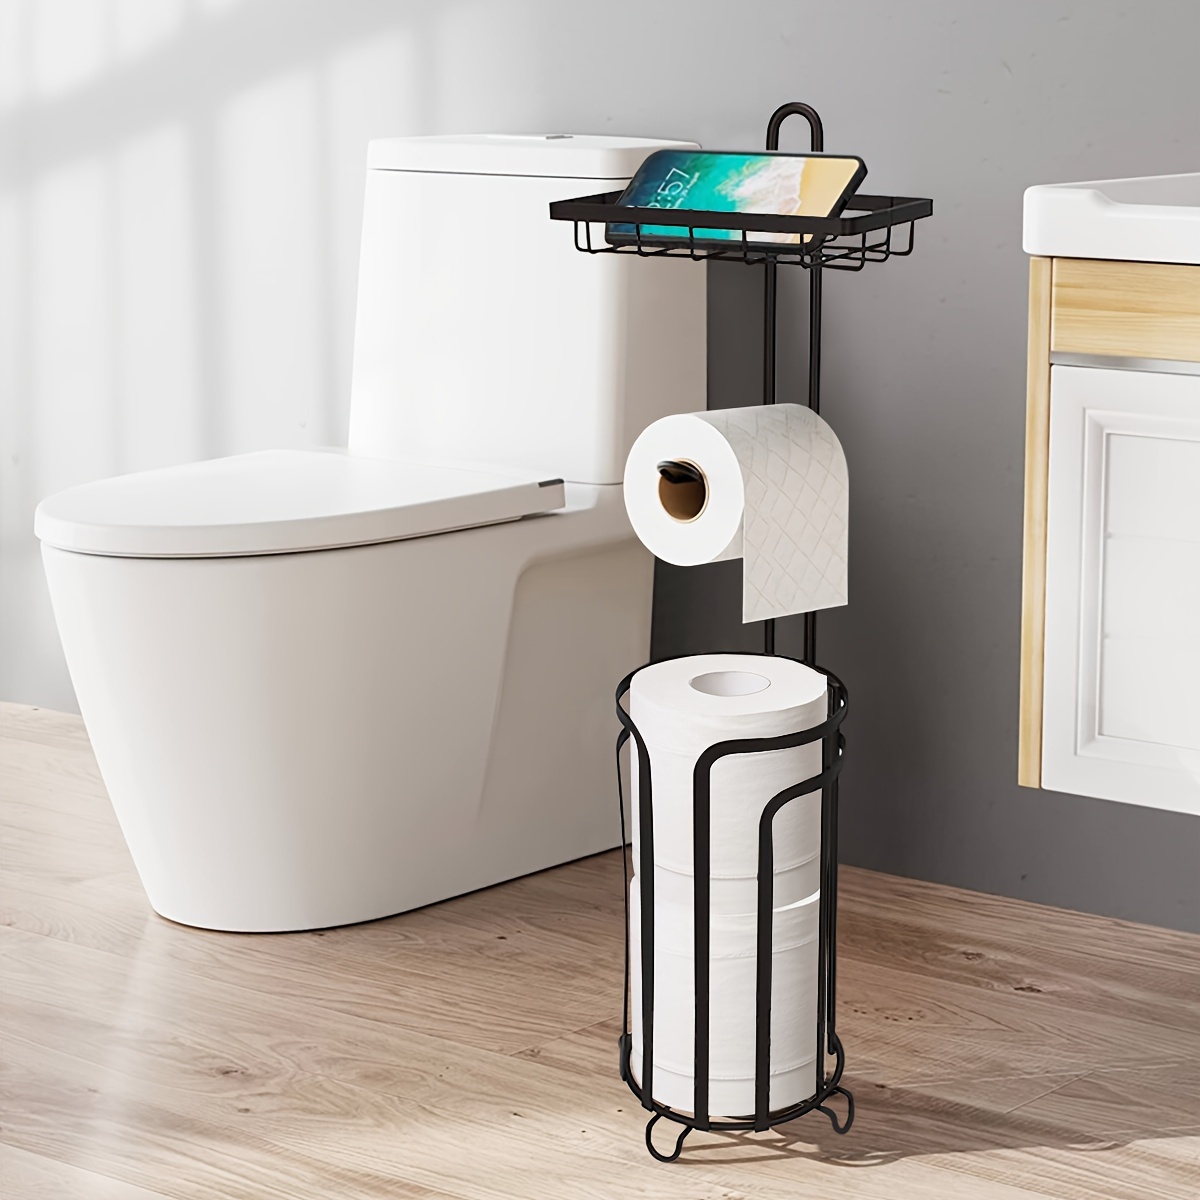 

Toilet Paper Holder Stand Tissue Paper Roll Dispenser With Shelf For Bathroom Storage Holds Reserve Mega Rolls Black